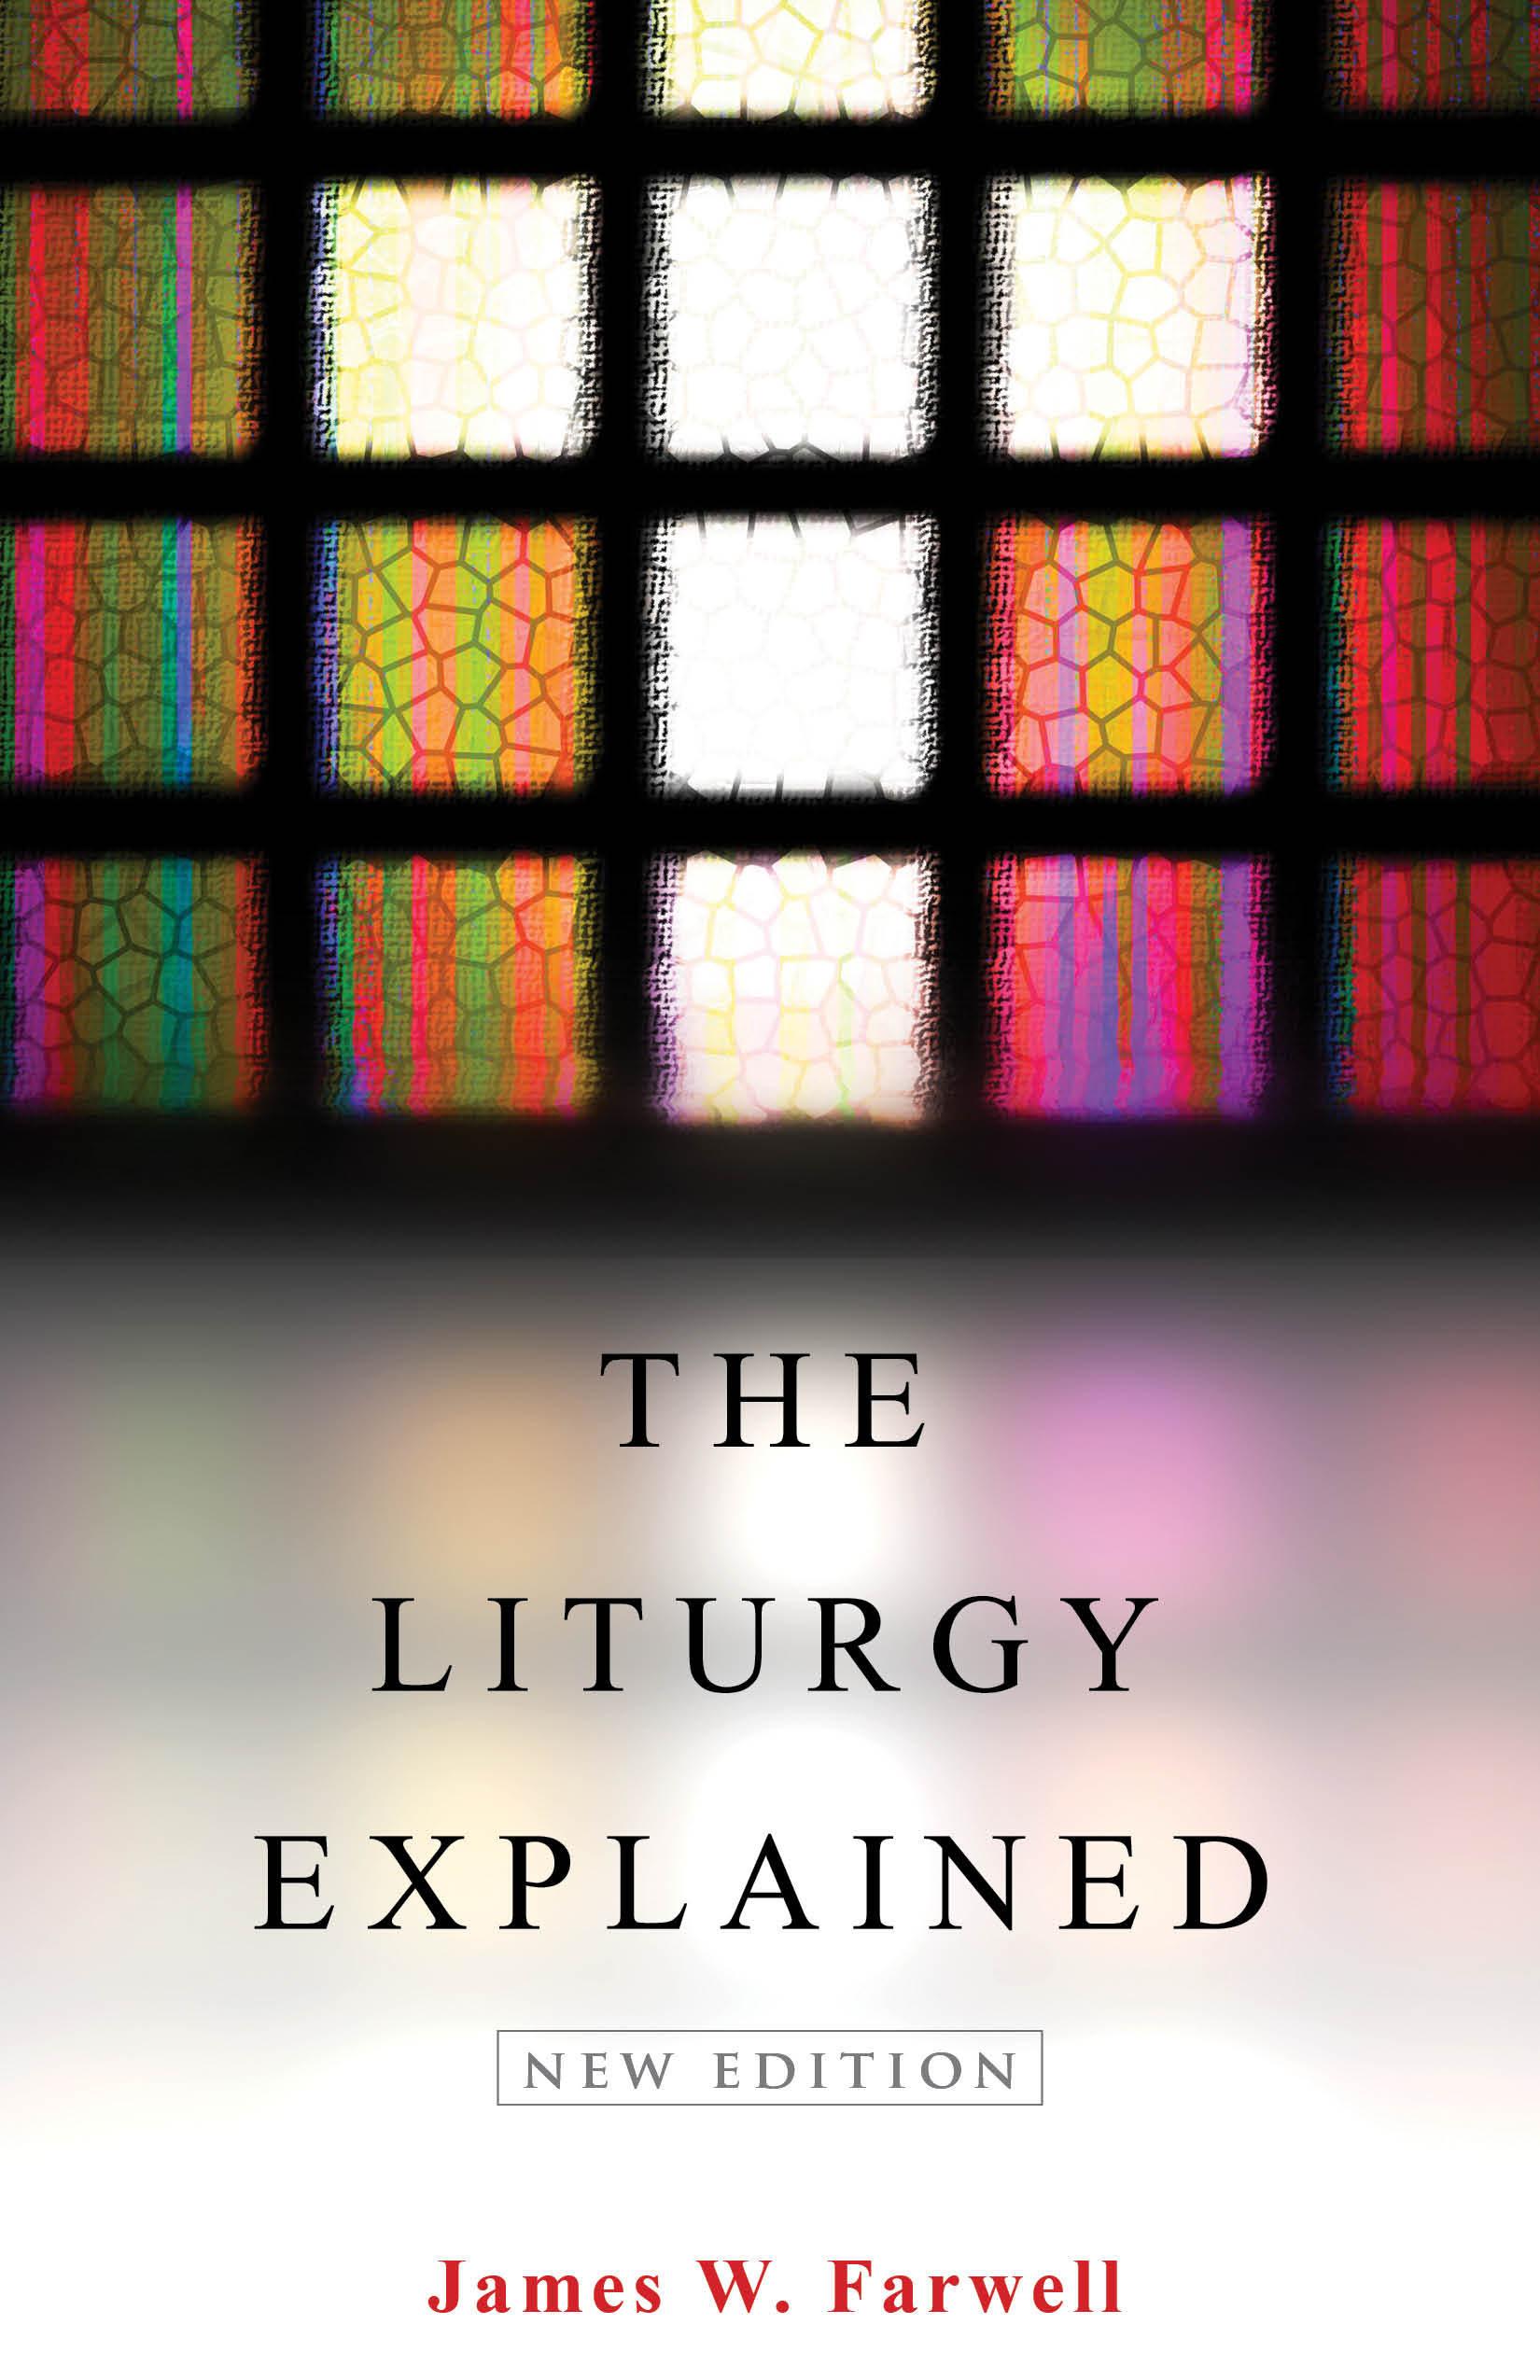 The Liturgy Explained